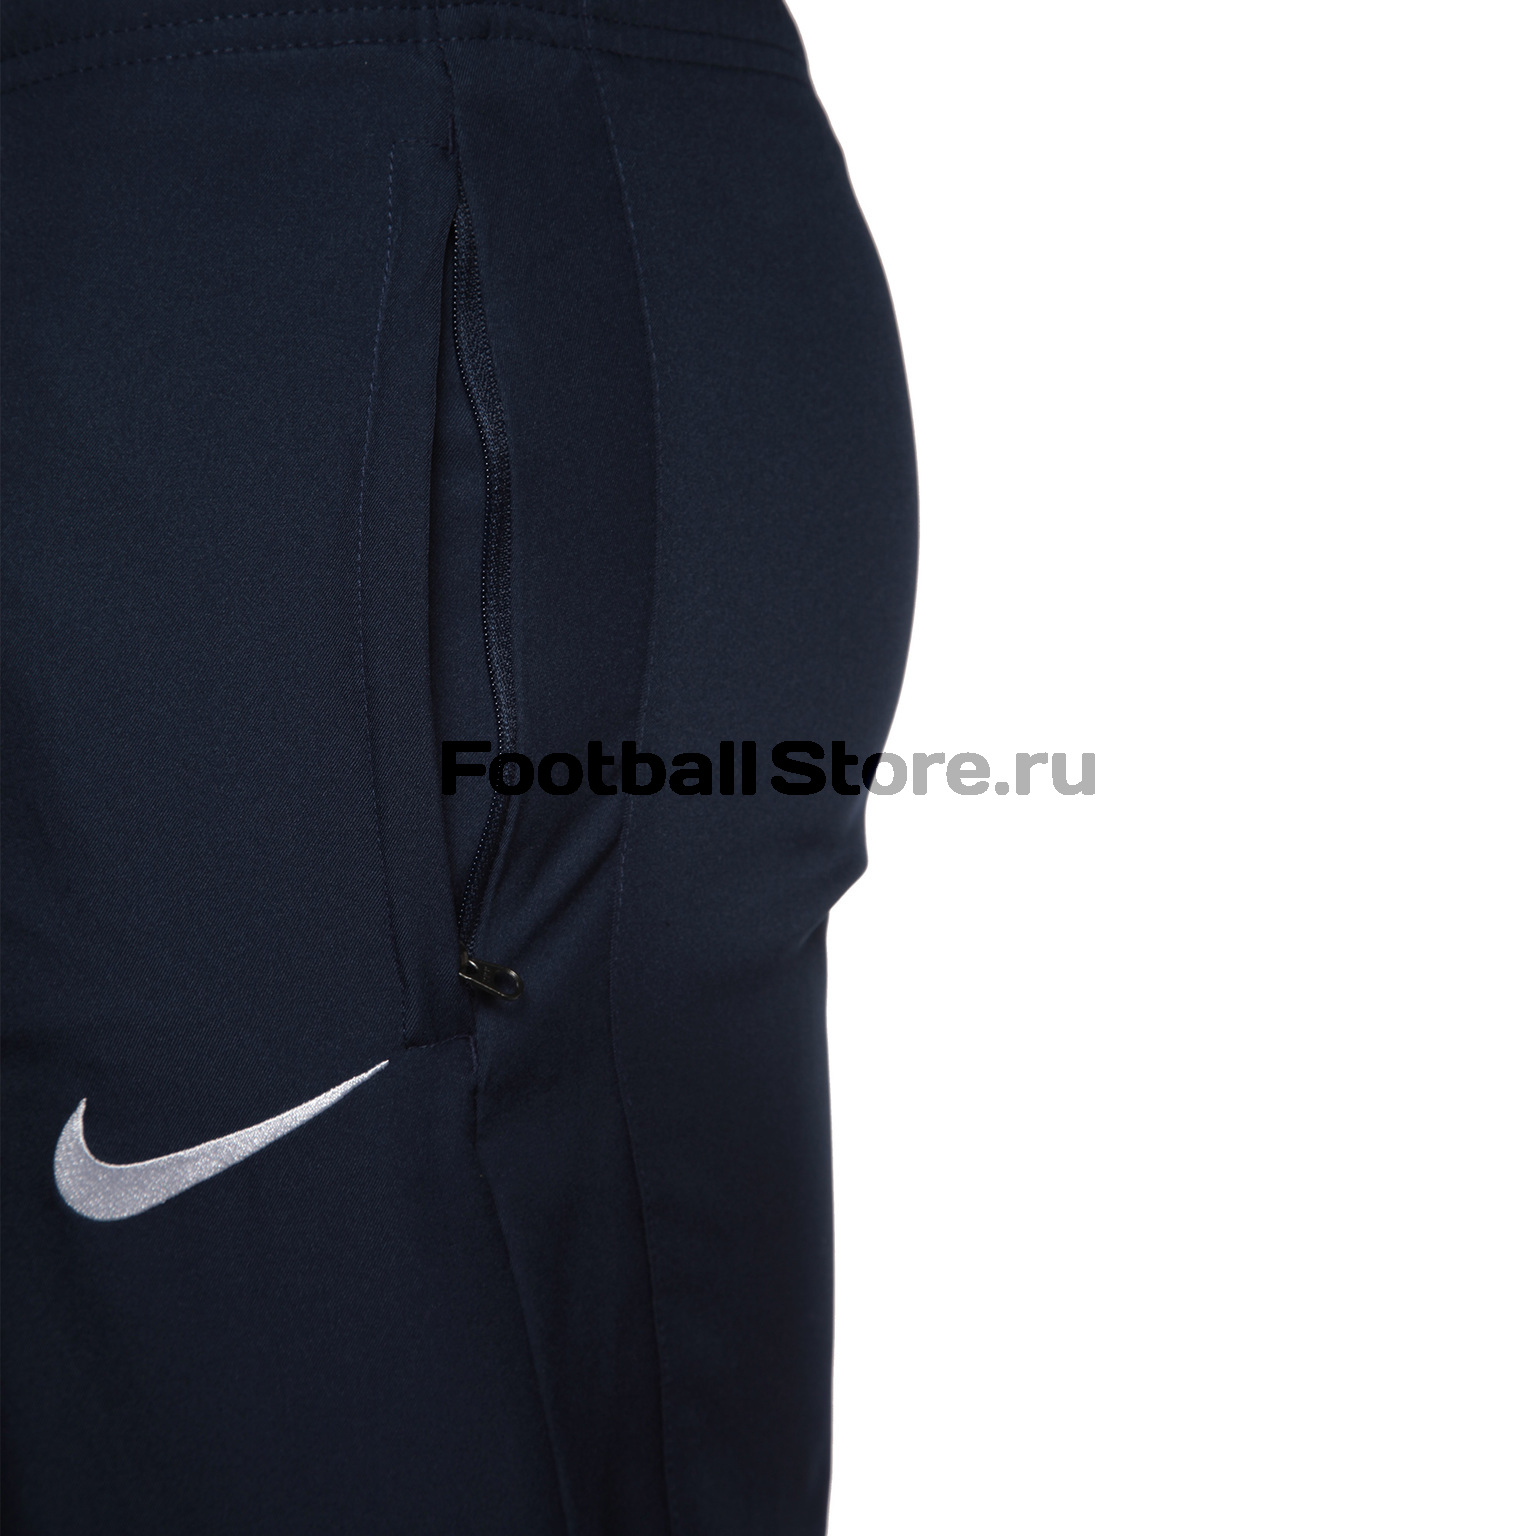 Костюм спортивный Nike Dry Academy18 TRK Suit W 893709-463